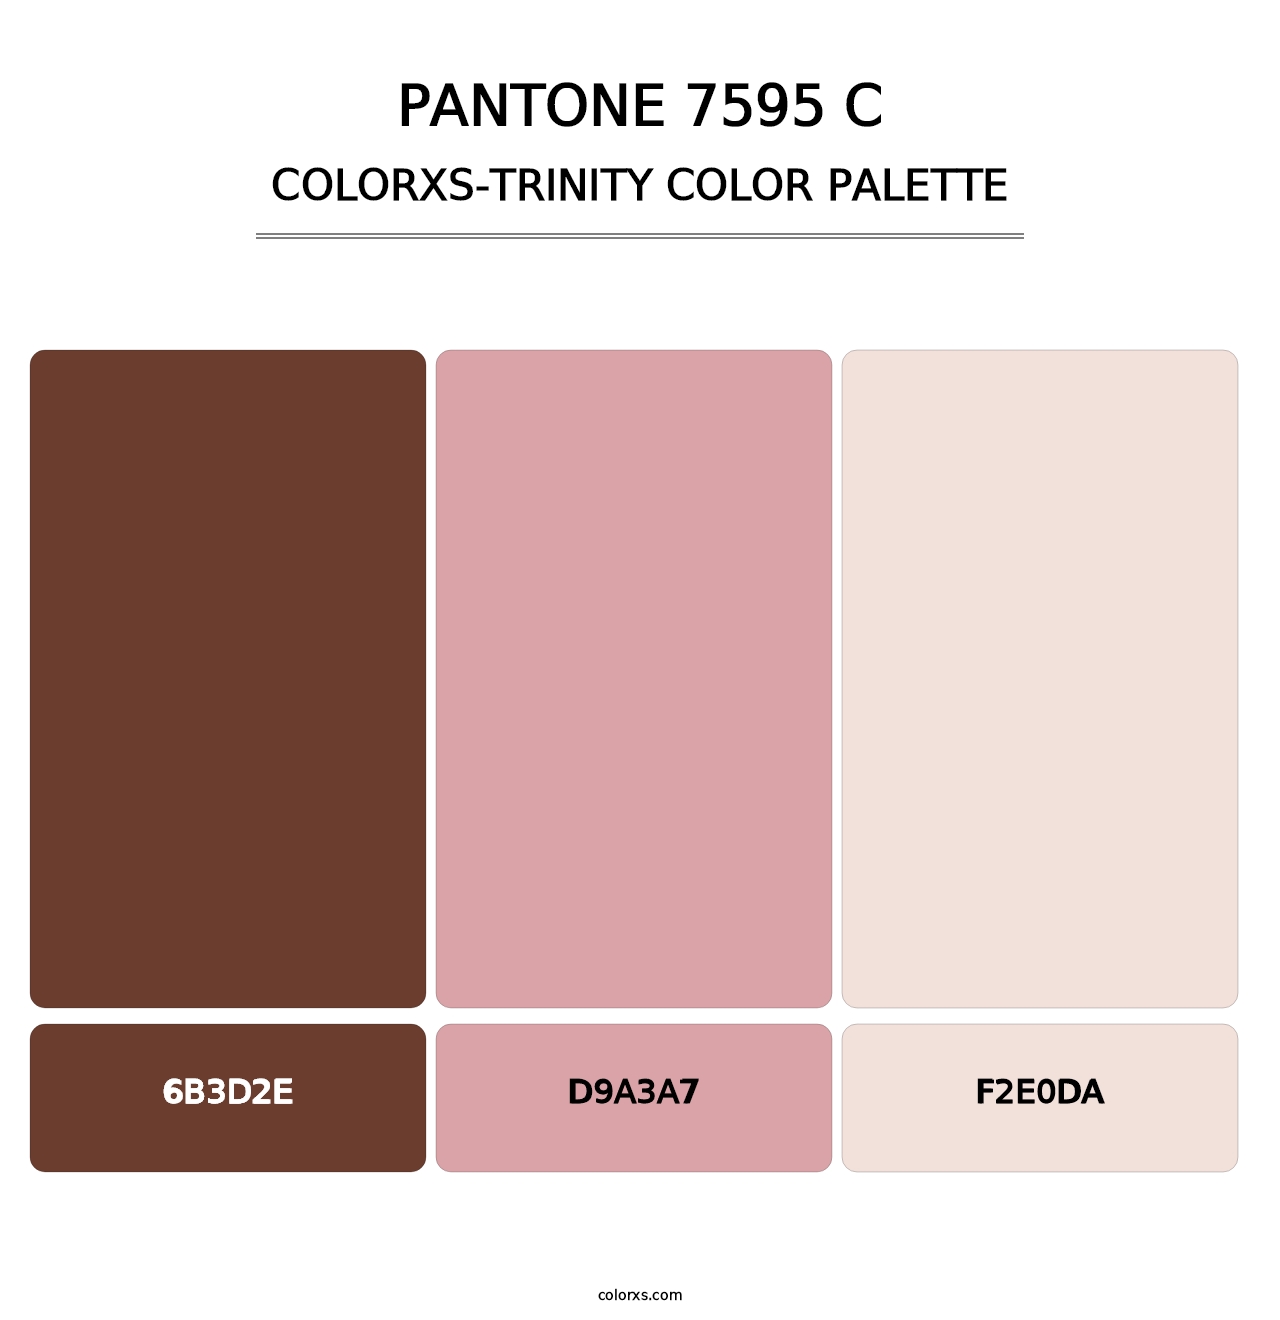 PANTONE 7595 C - Colorxs Trinity Palette